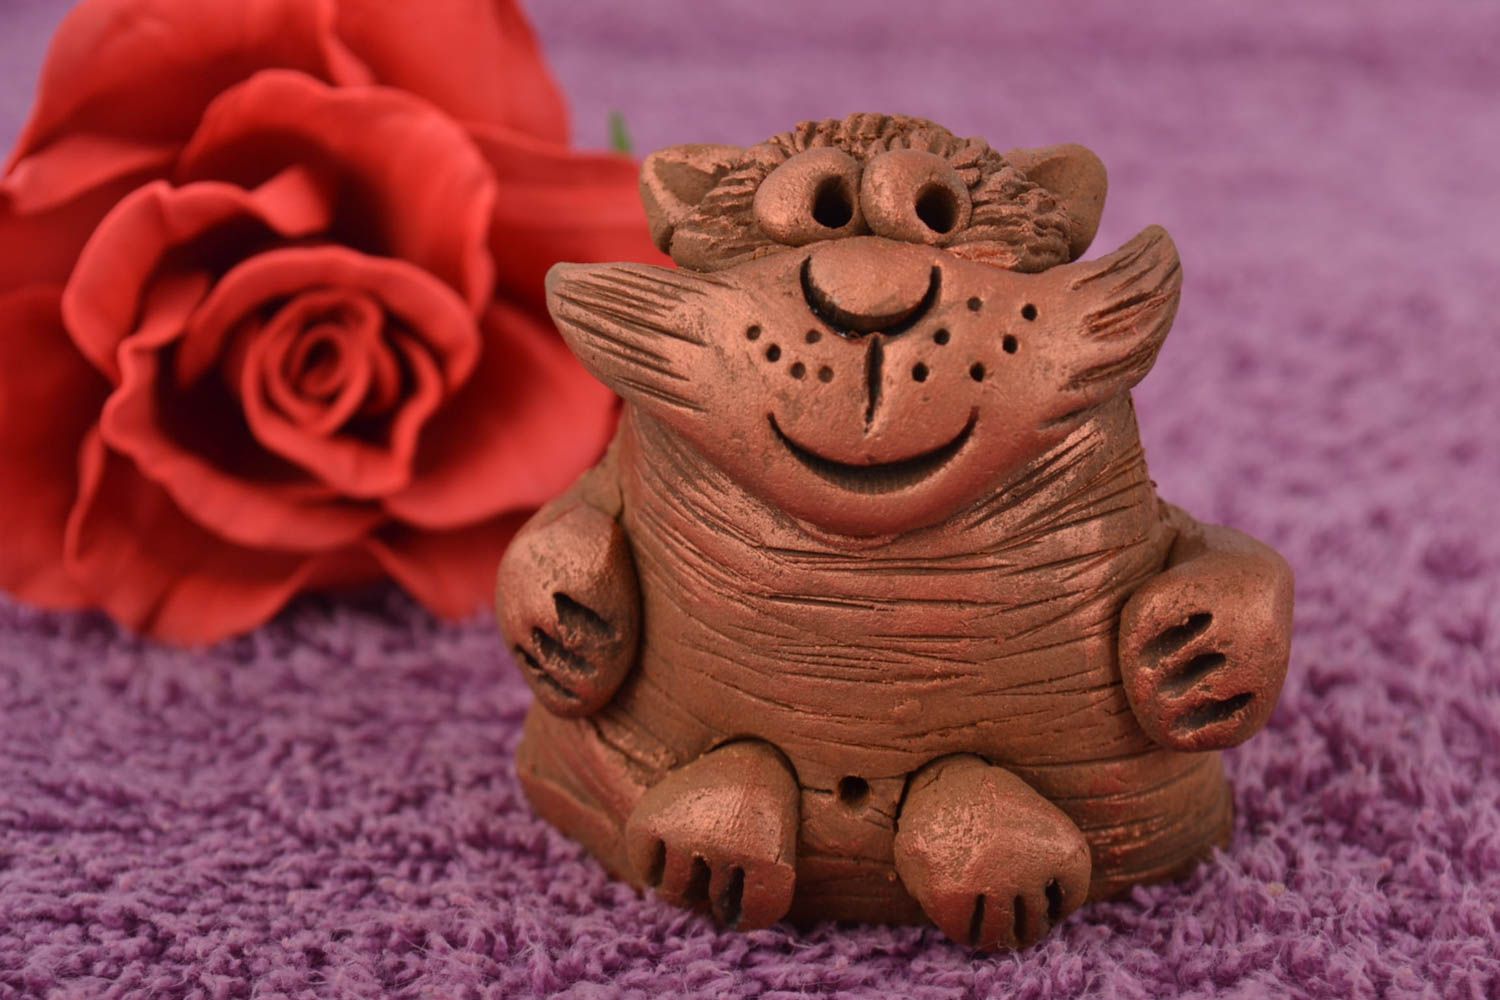 Statuina fatta a mano figurina gatto in ceramica souvenir di terracotta foto 1